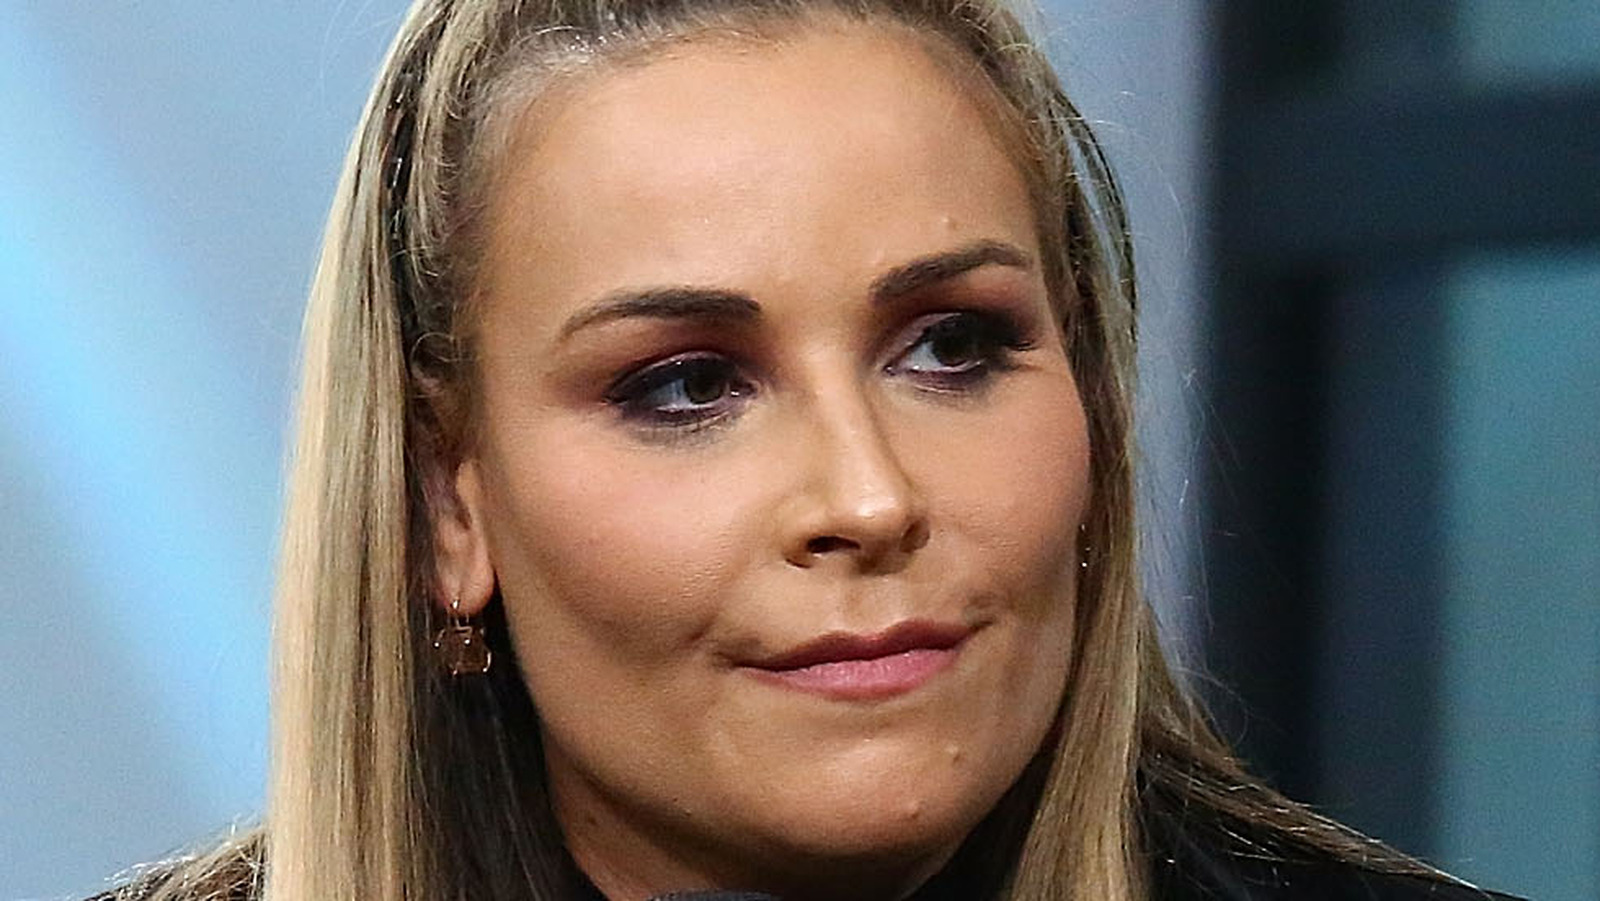 WWE se negó a filmar este momento familiar intensamente personal de Natalya